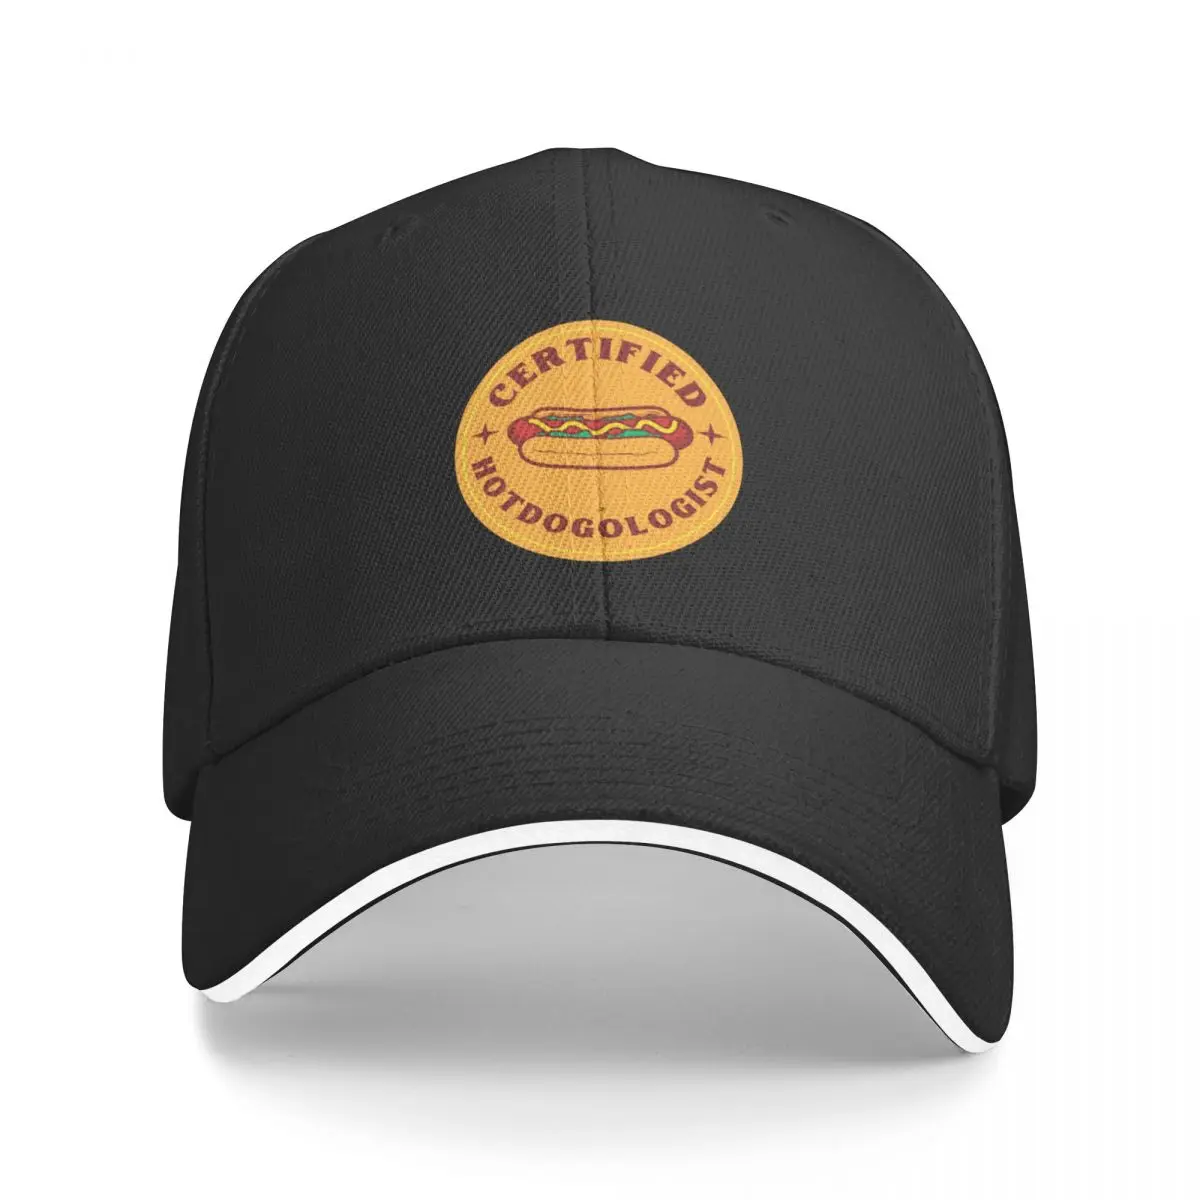 

Certified Hotdogologist, Funny Hot Dog Lover Baseball Cap Fashion Beach Women's Hats Men's